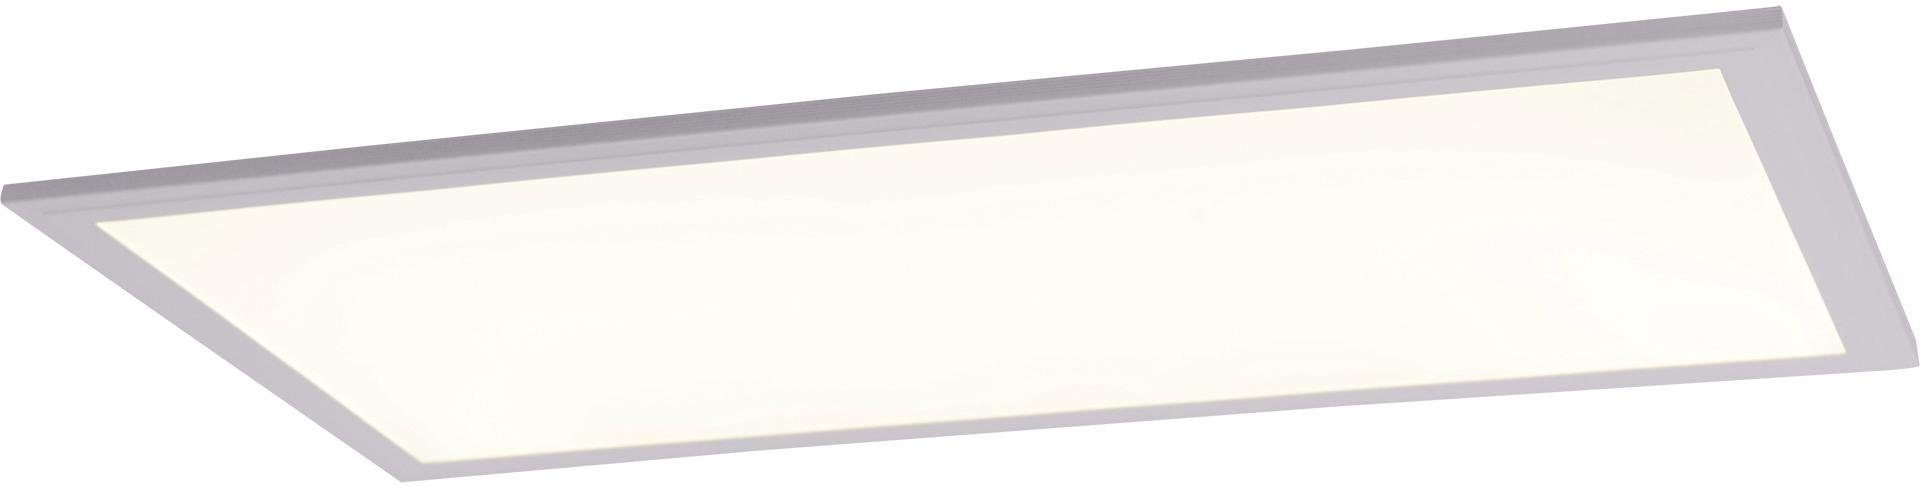 näve LED Deckenleuchte Sorriso, LED fest Neutralweiß, total 96 LED´s 18W inkl. "Sorriso", 4000K; 30x60cm Aufbaupanel 1600lm integriert